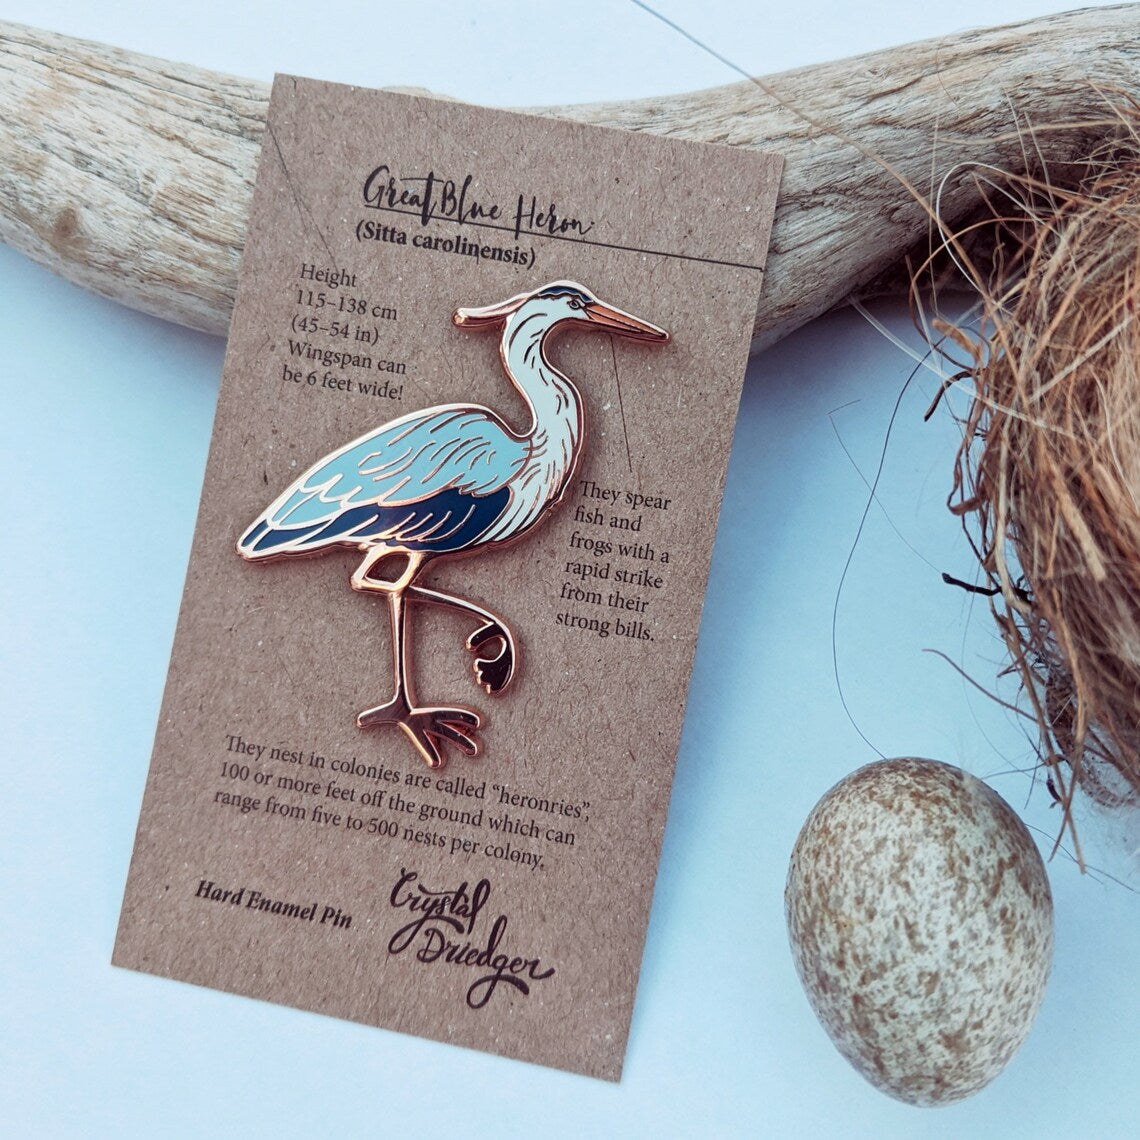 Great Blue Heron Enamel Pin | Crystal Driedger Art - Oscar & Libby's